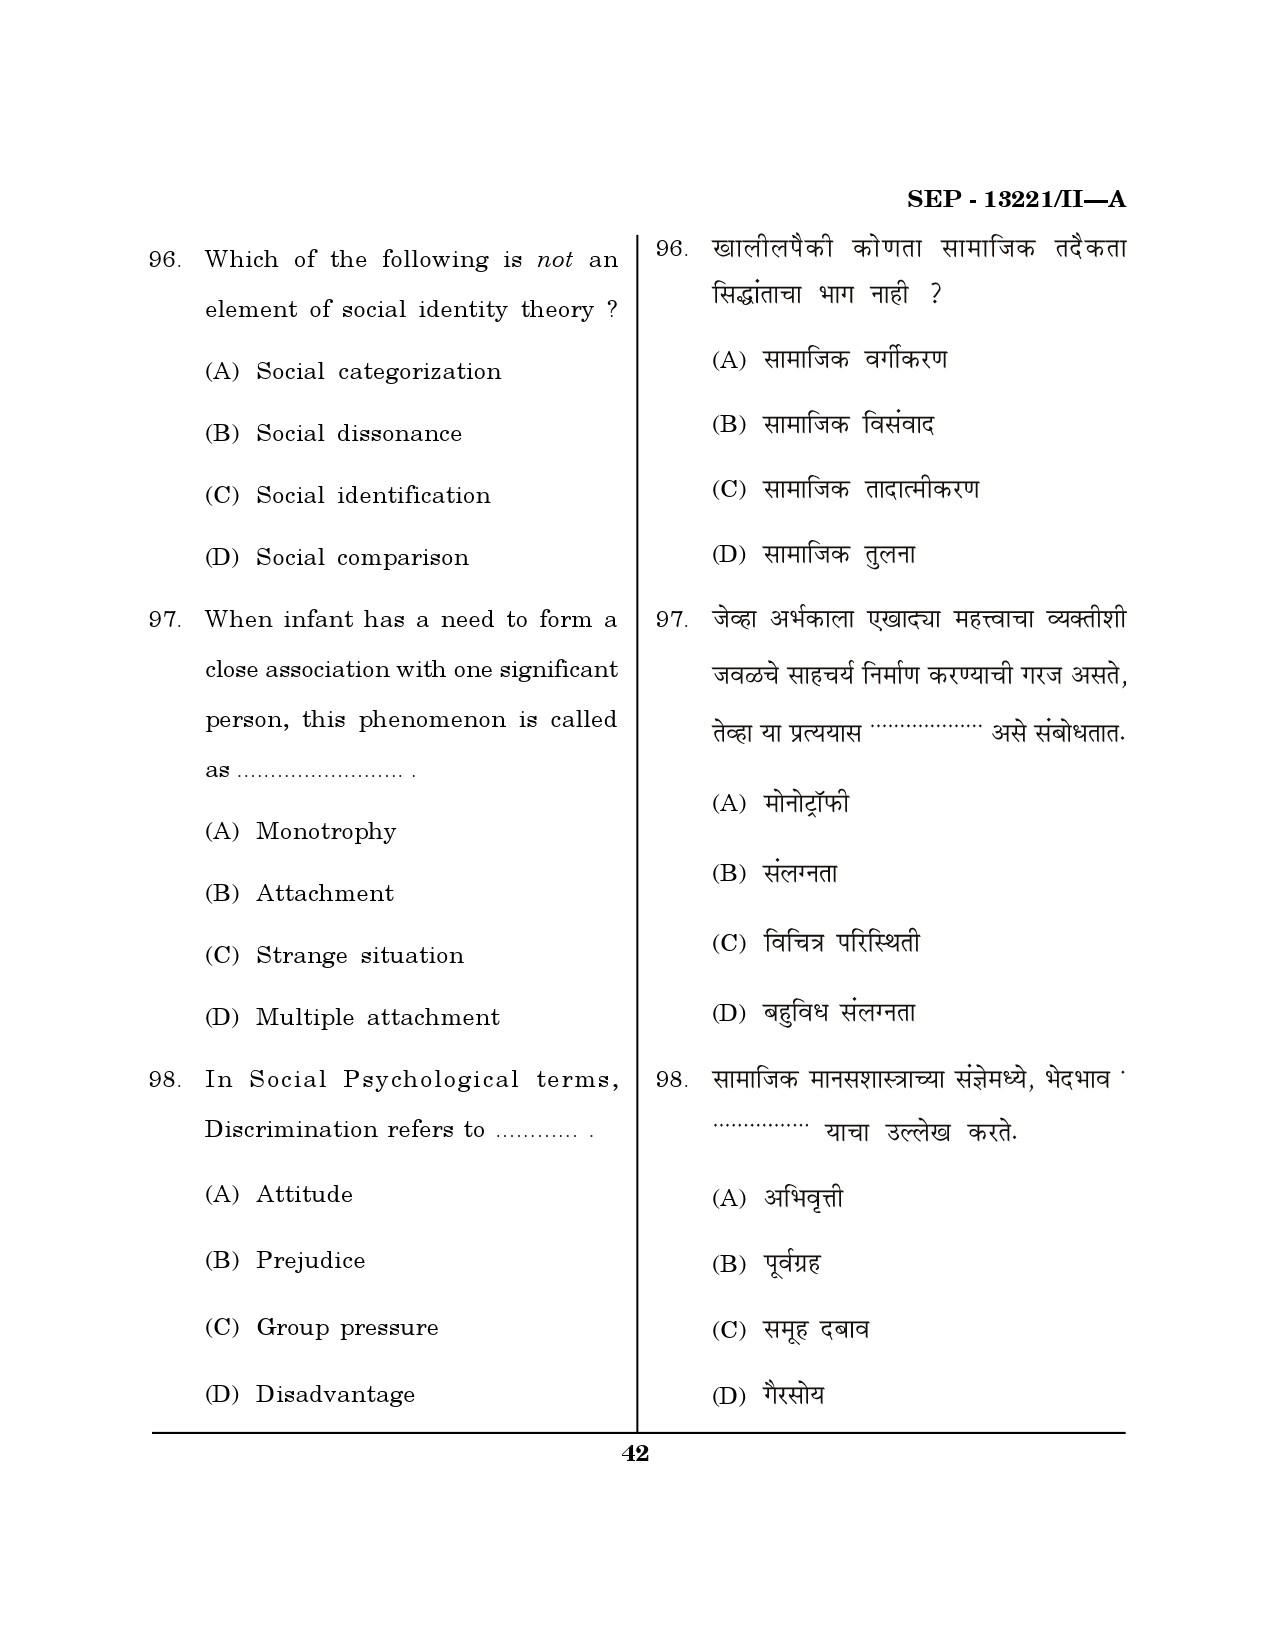 Maharashtra SET Psychology Exam Question Paper September 2021 41